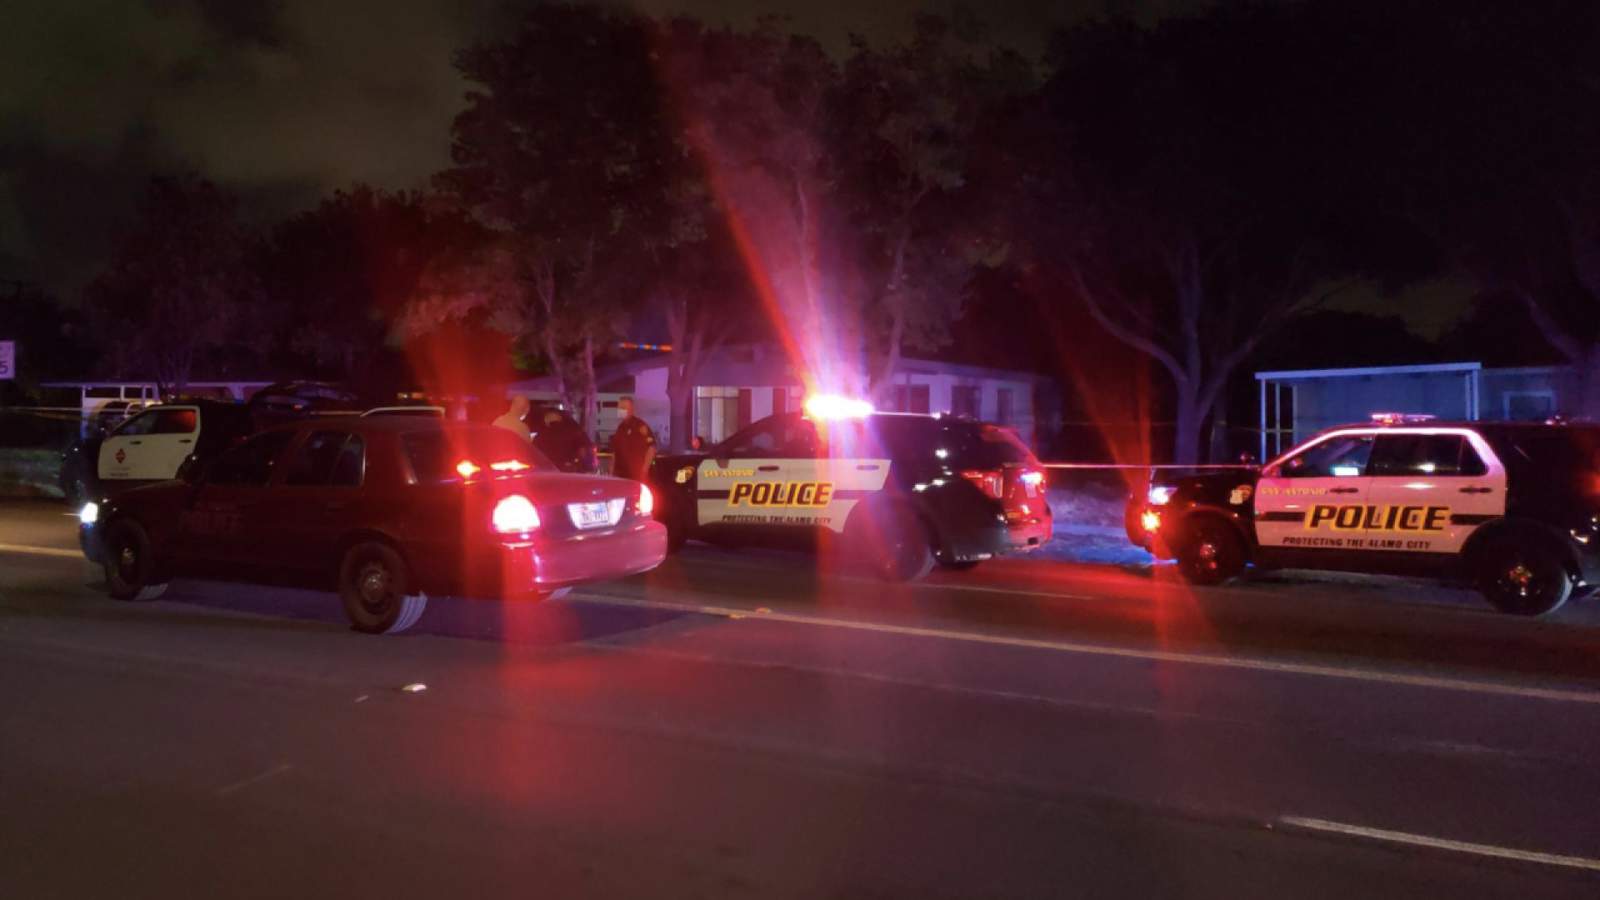 Teen fatally shot in apparent ambush outside home, San Antonio police say